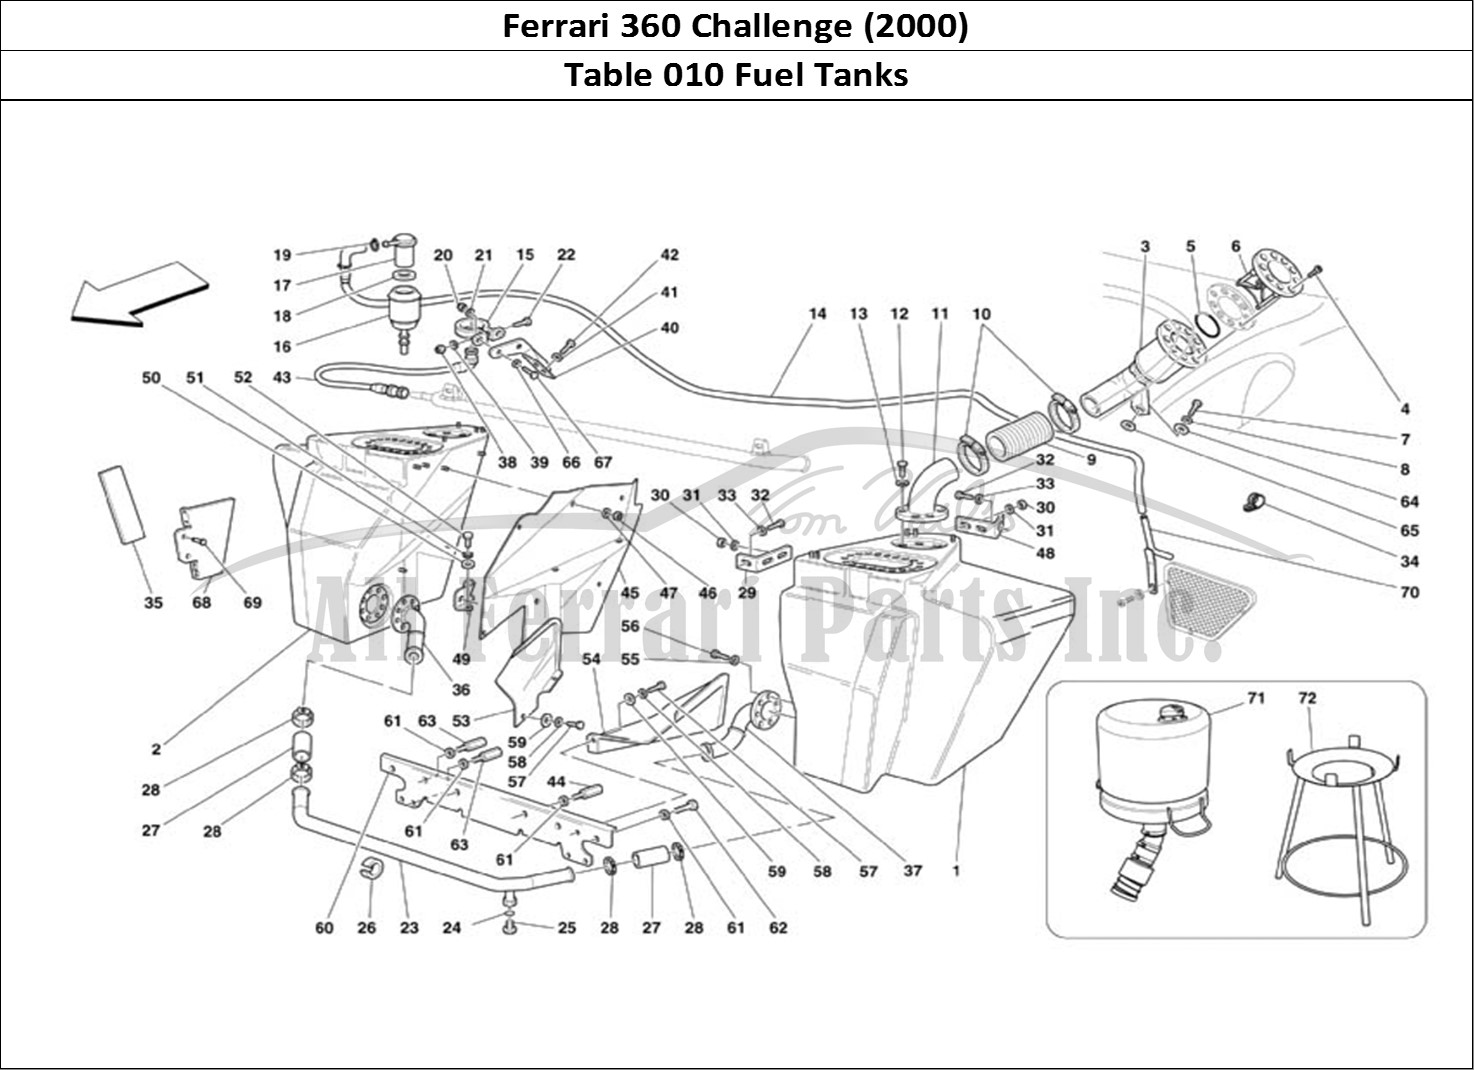 Ferrari Parts Ferrari 360 Challenge (2000) Page 010 Fuel Tanks